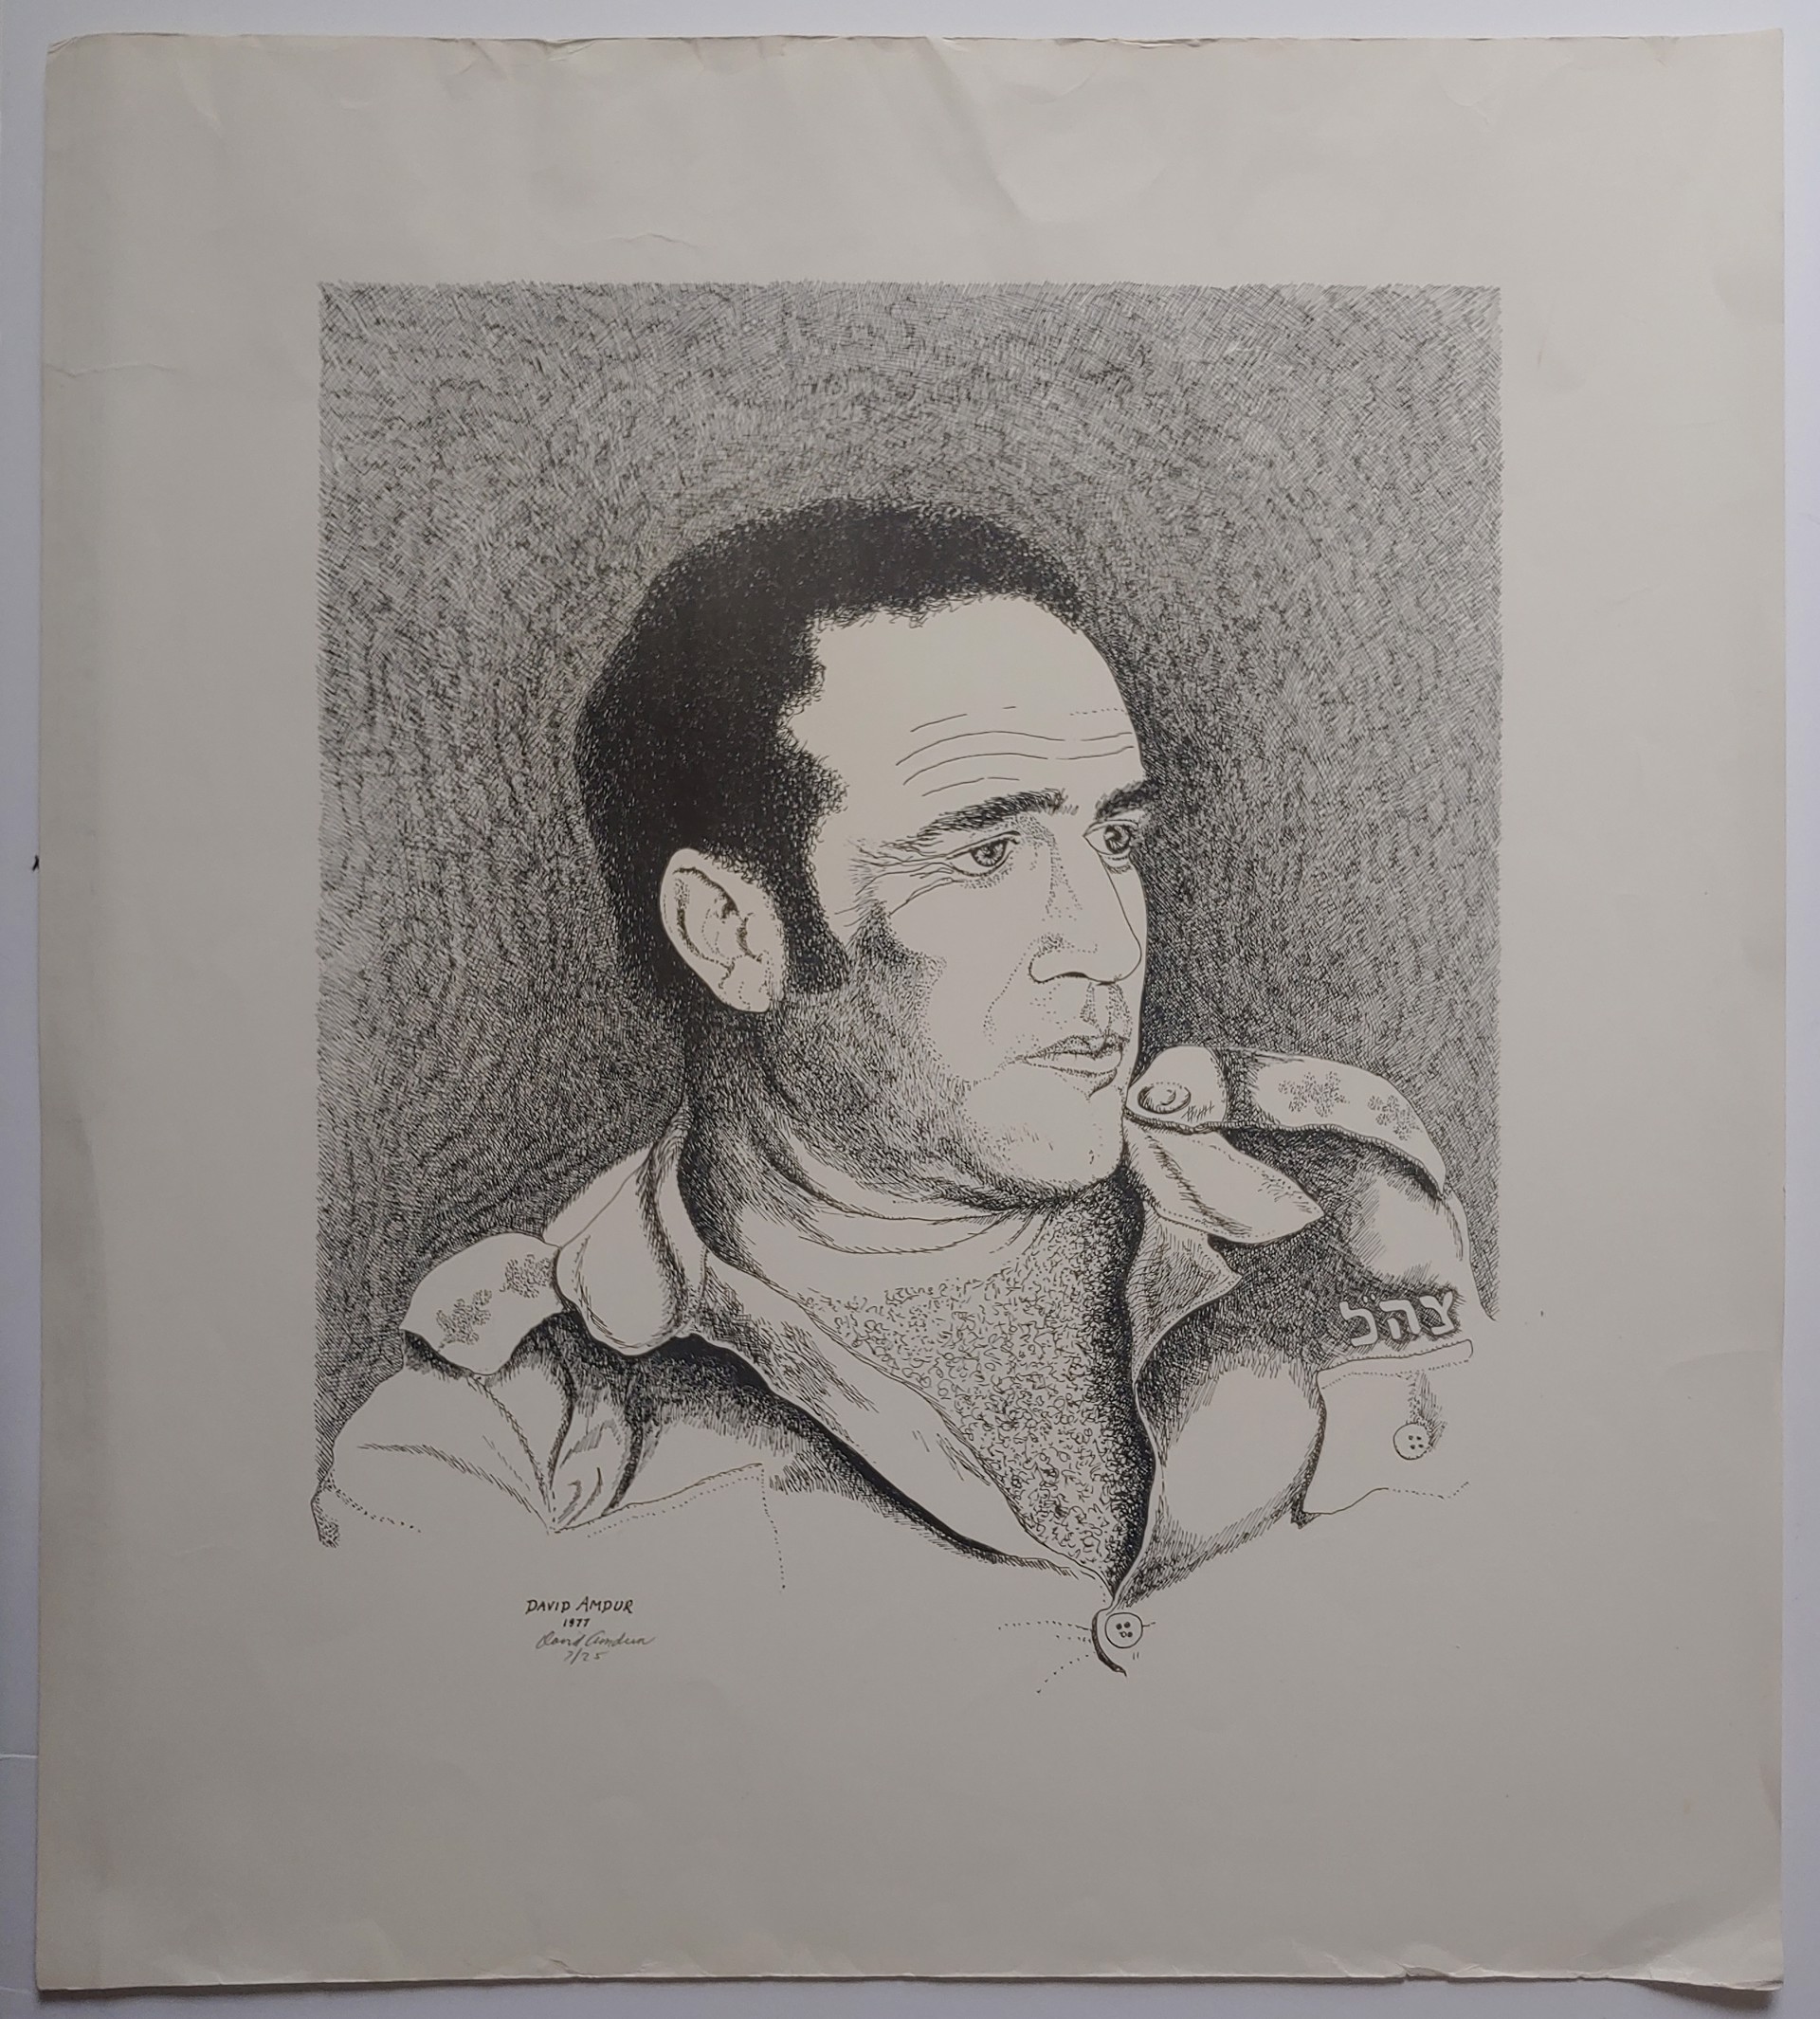 Print of Man's Portrait by David Amdur